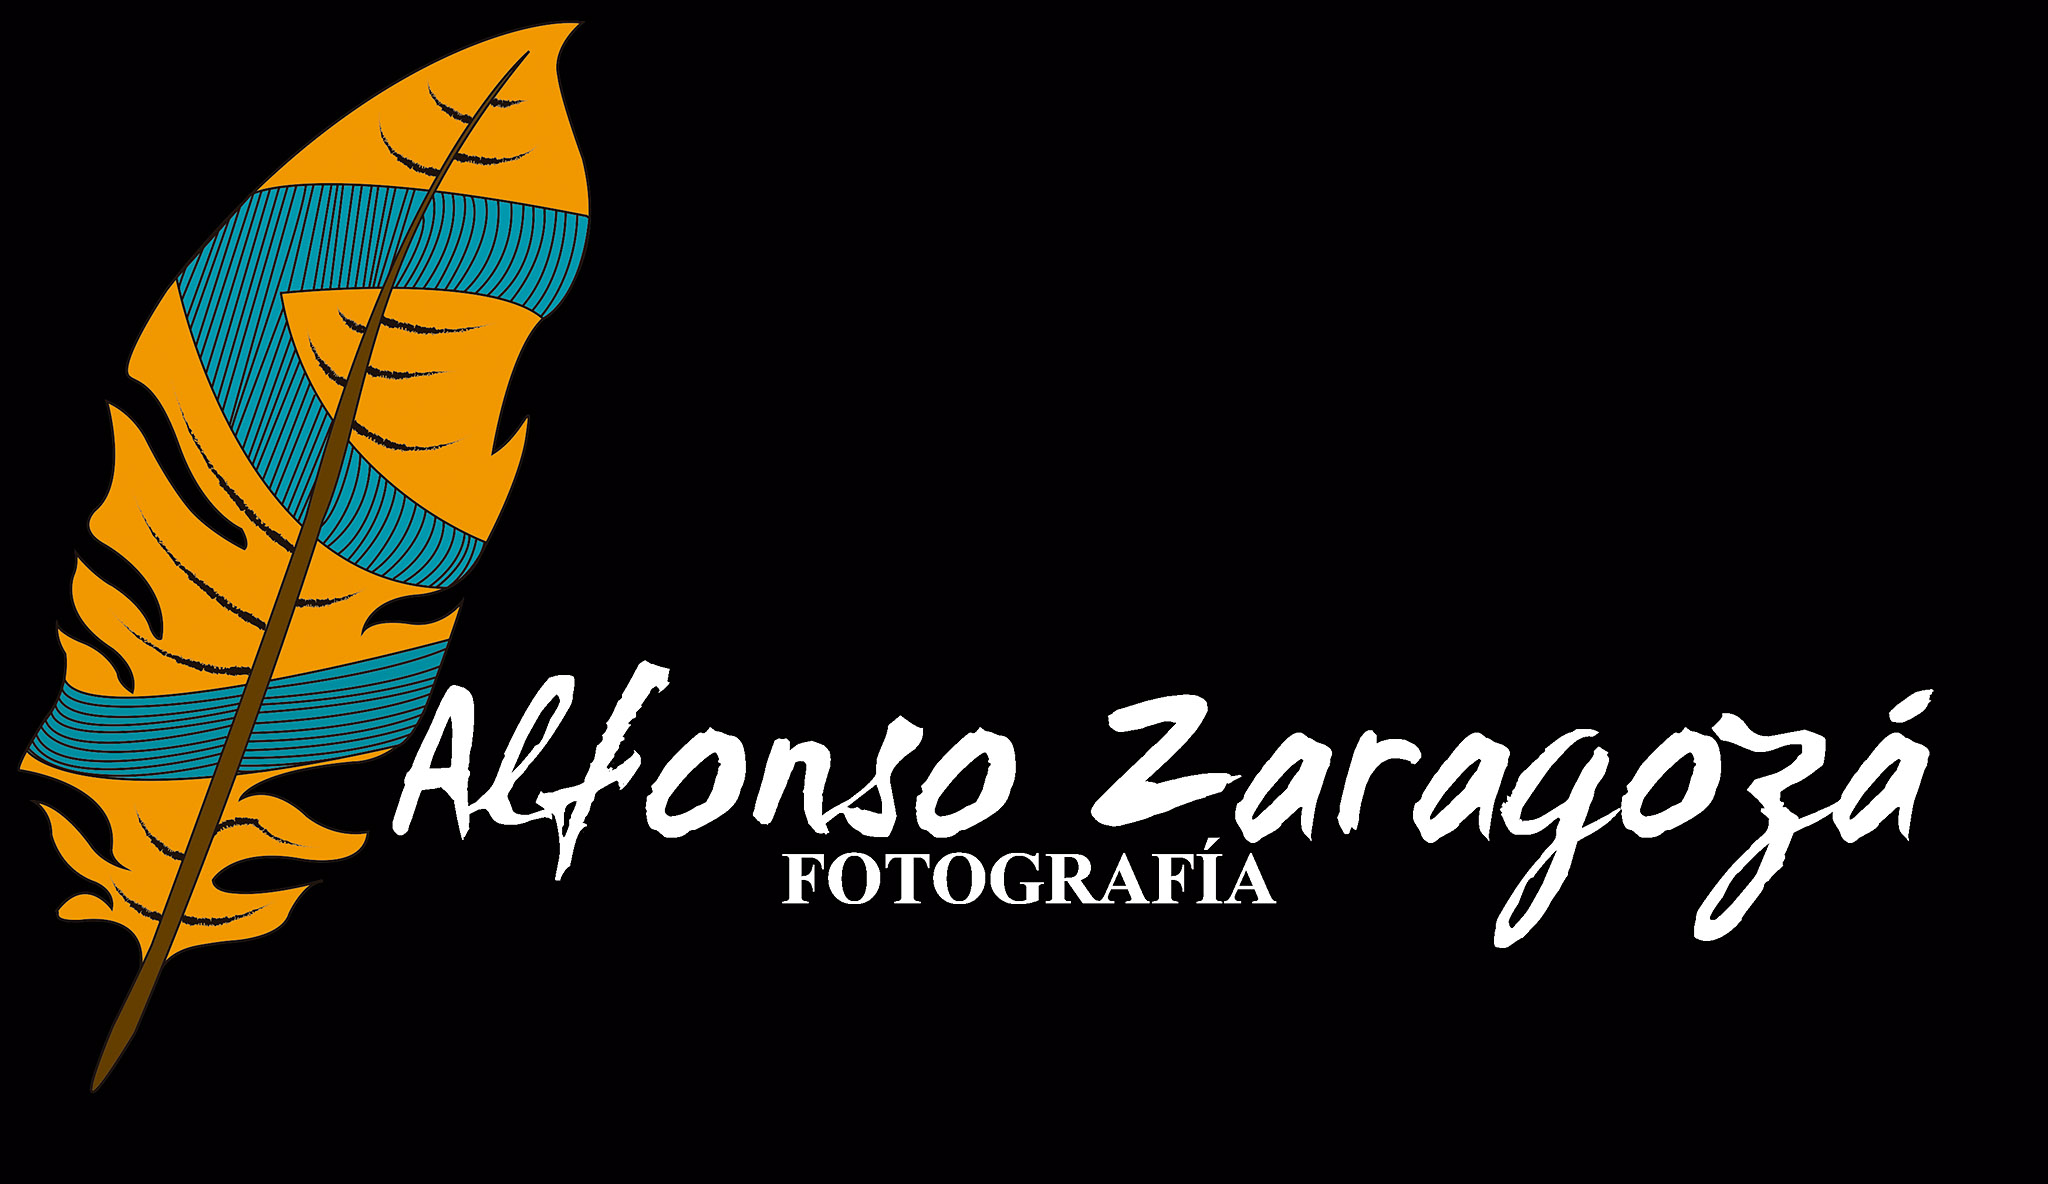 Alfonso Zaragoza Fotografía